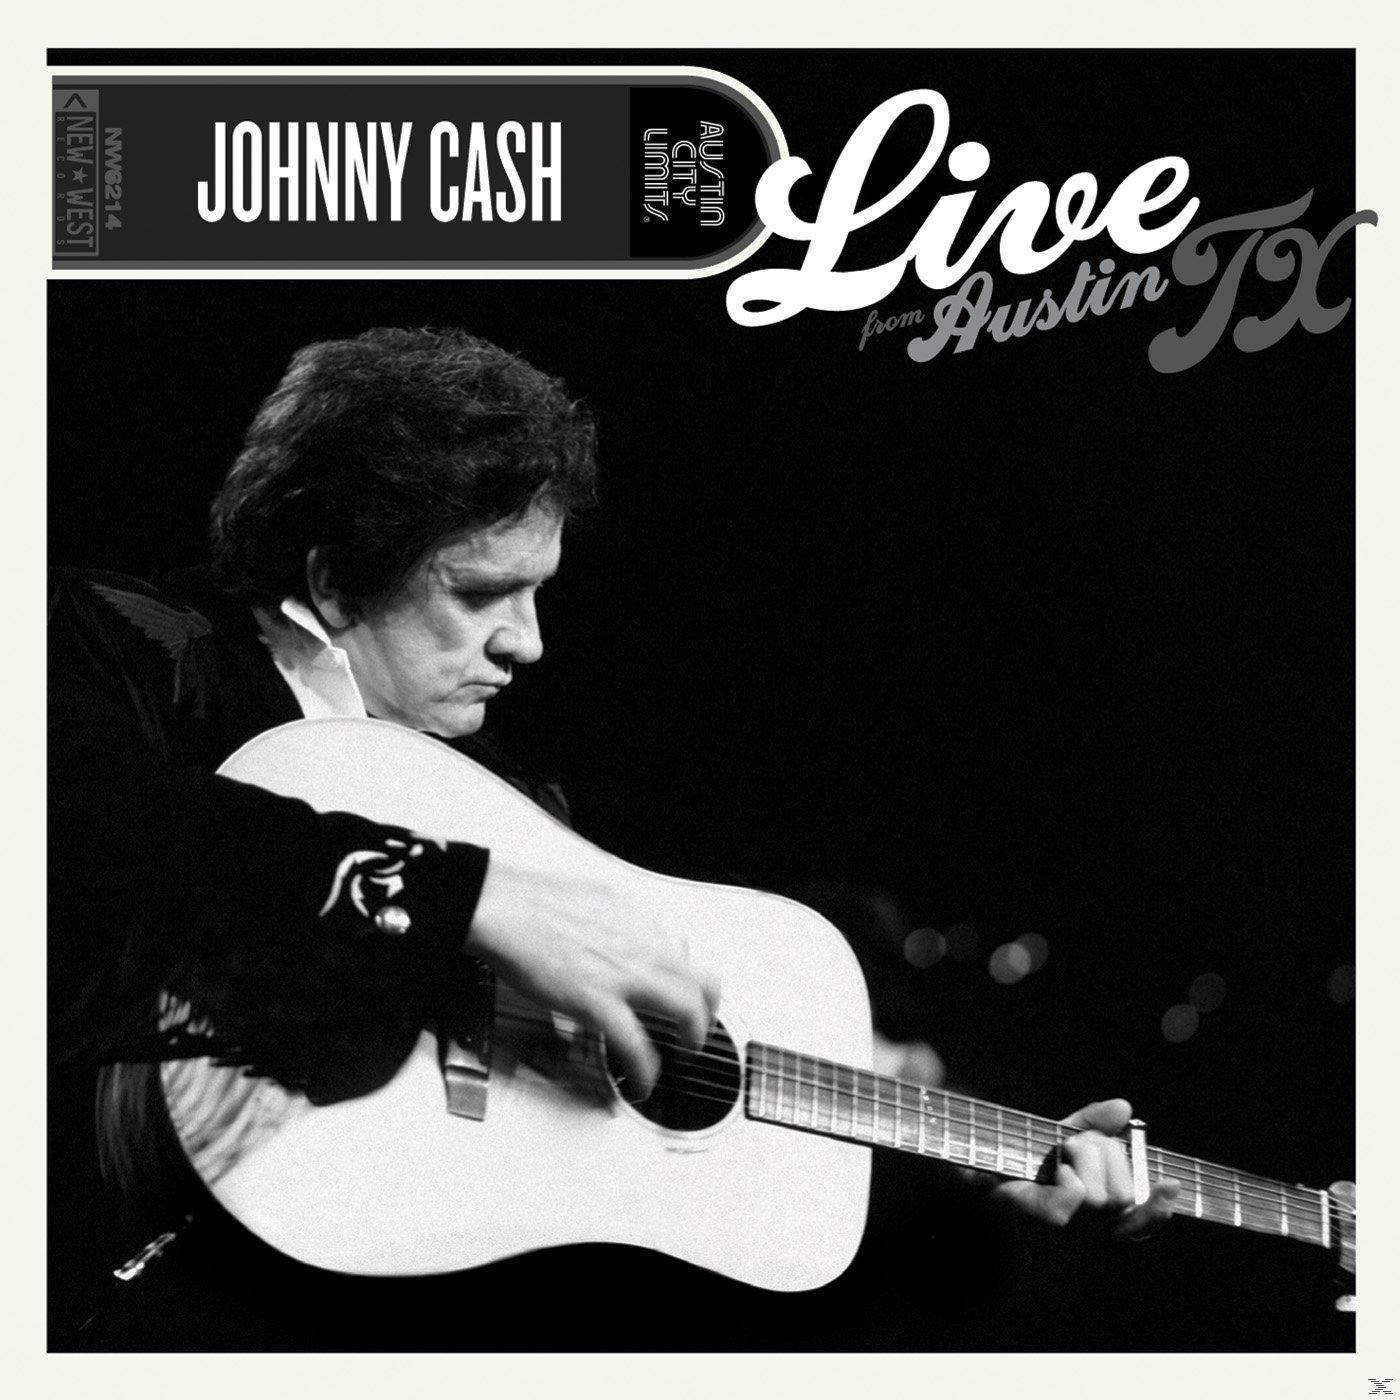 Johnny Cash - From TX Live Austin - (Vinyl)